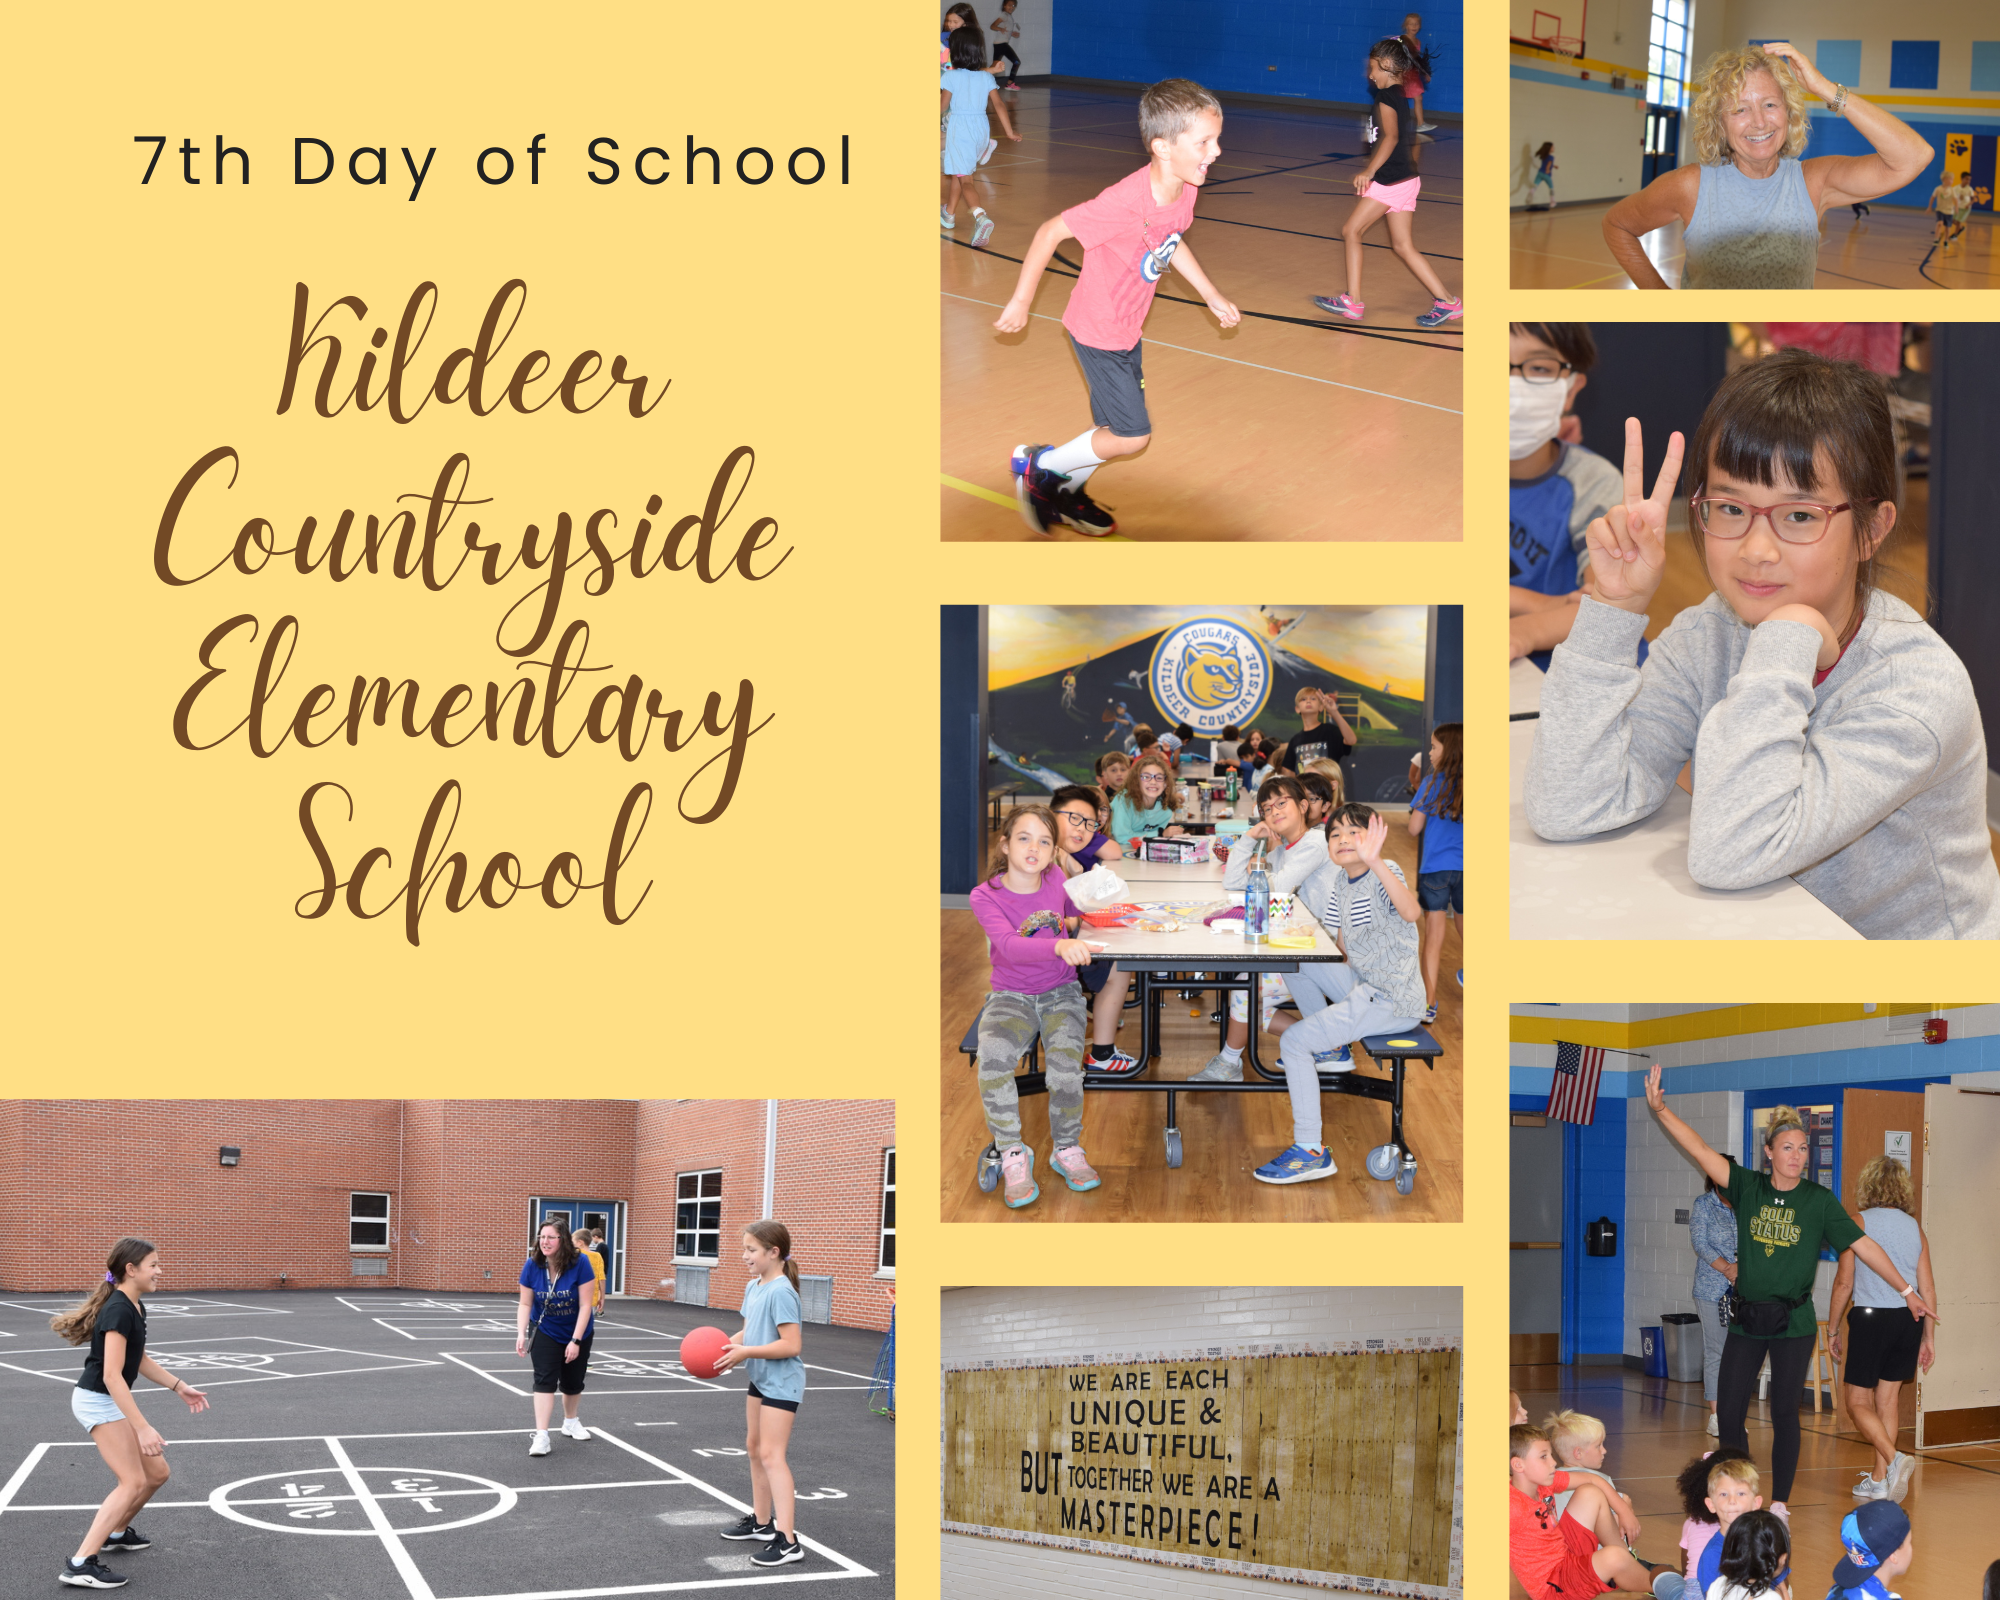 7th Day of School Year at Kildeer Countryside Elementary School